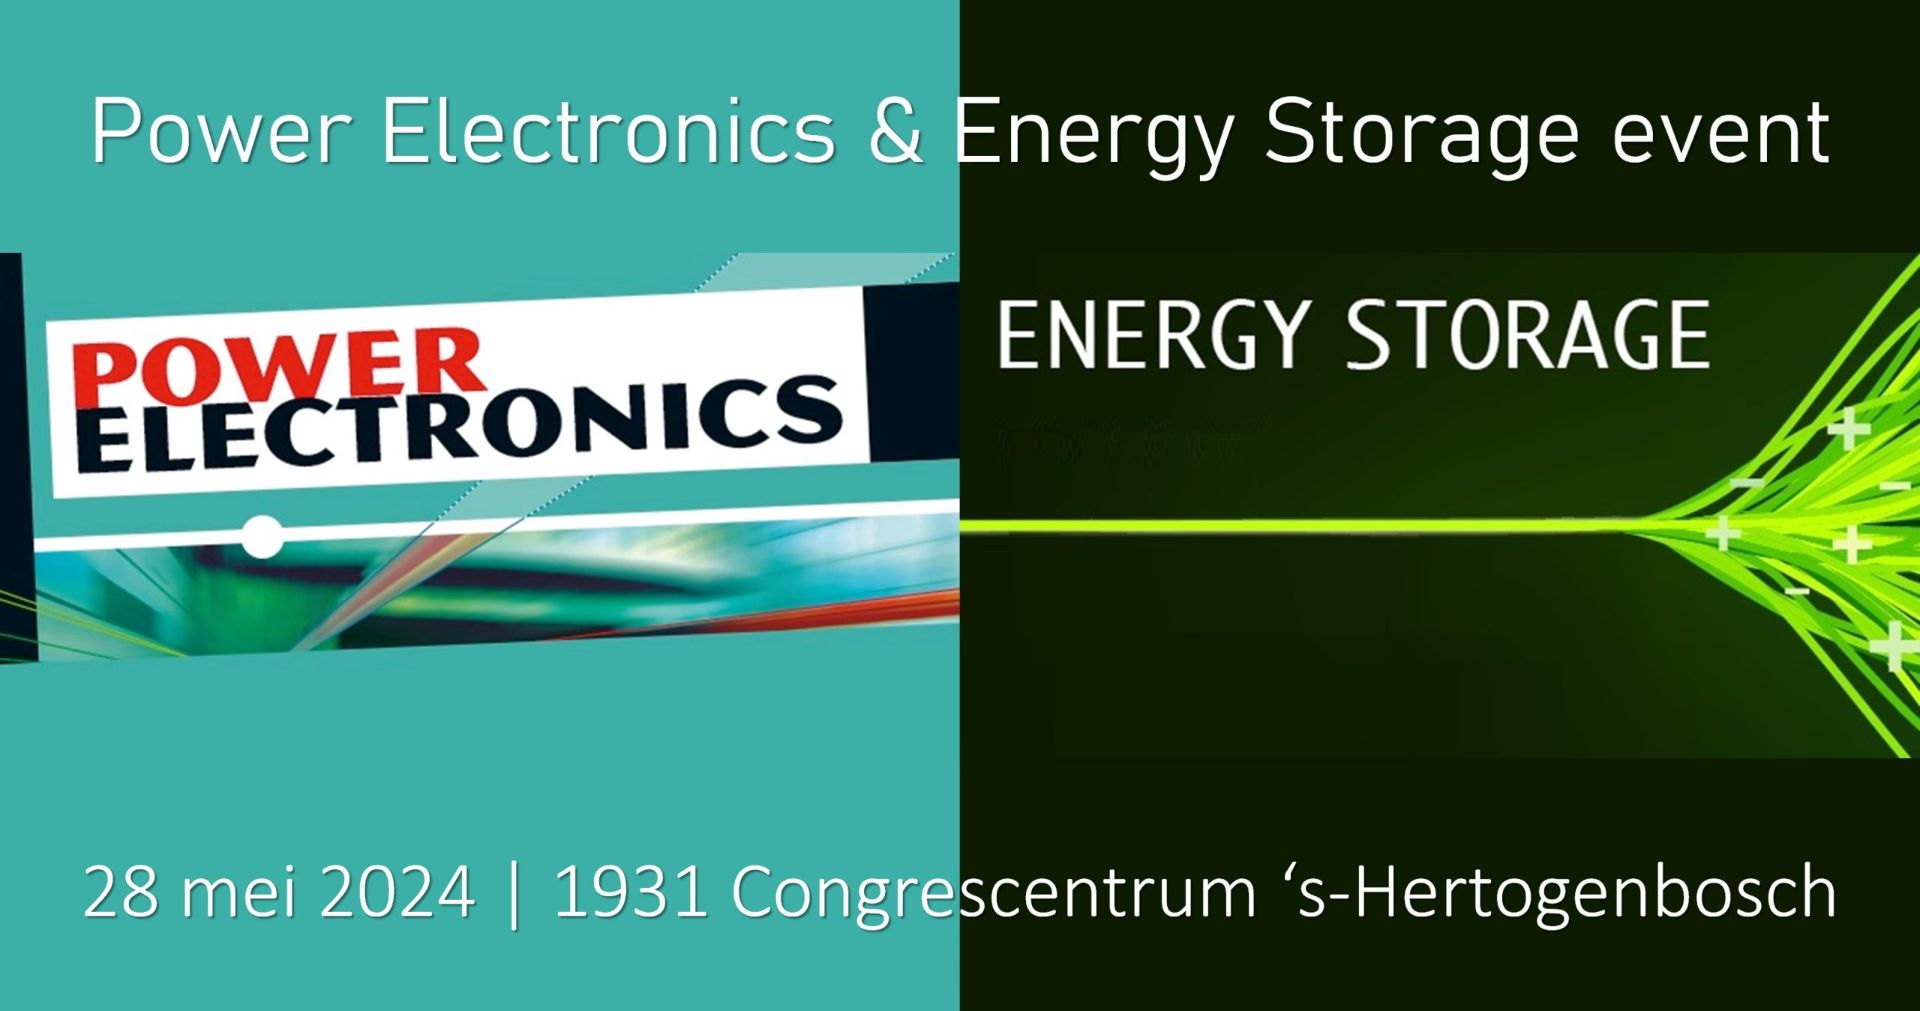 Power Electronics & Energy Storage event